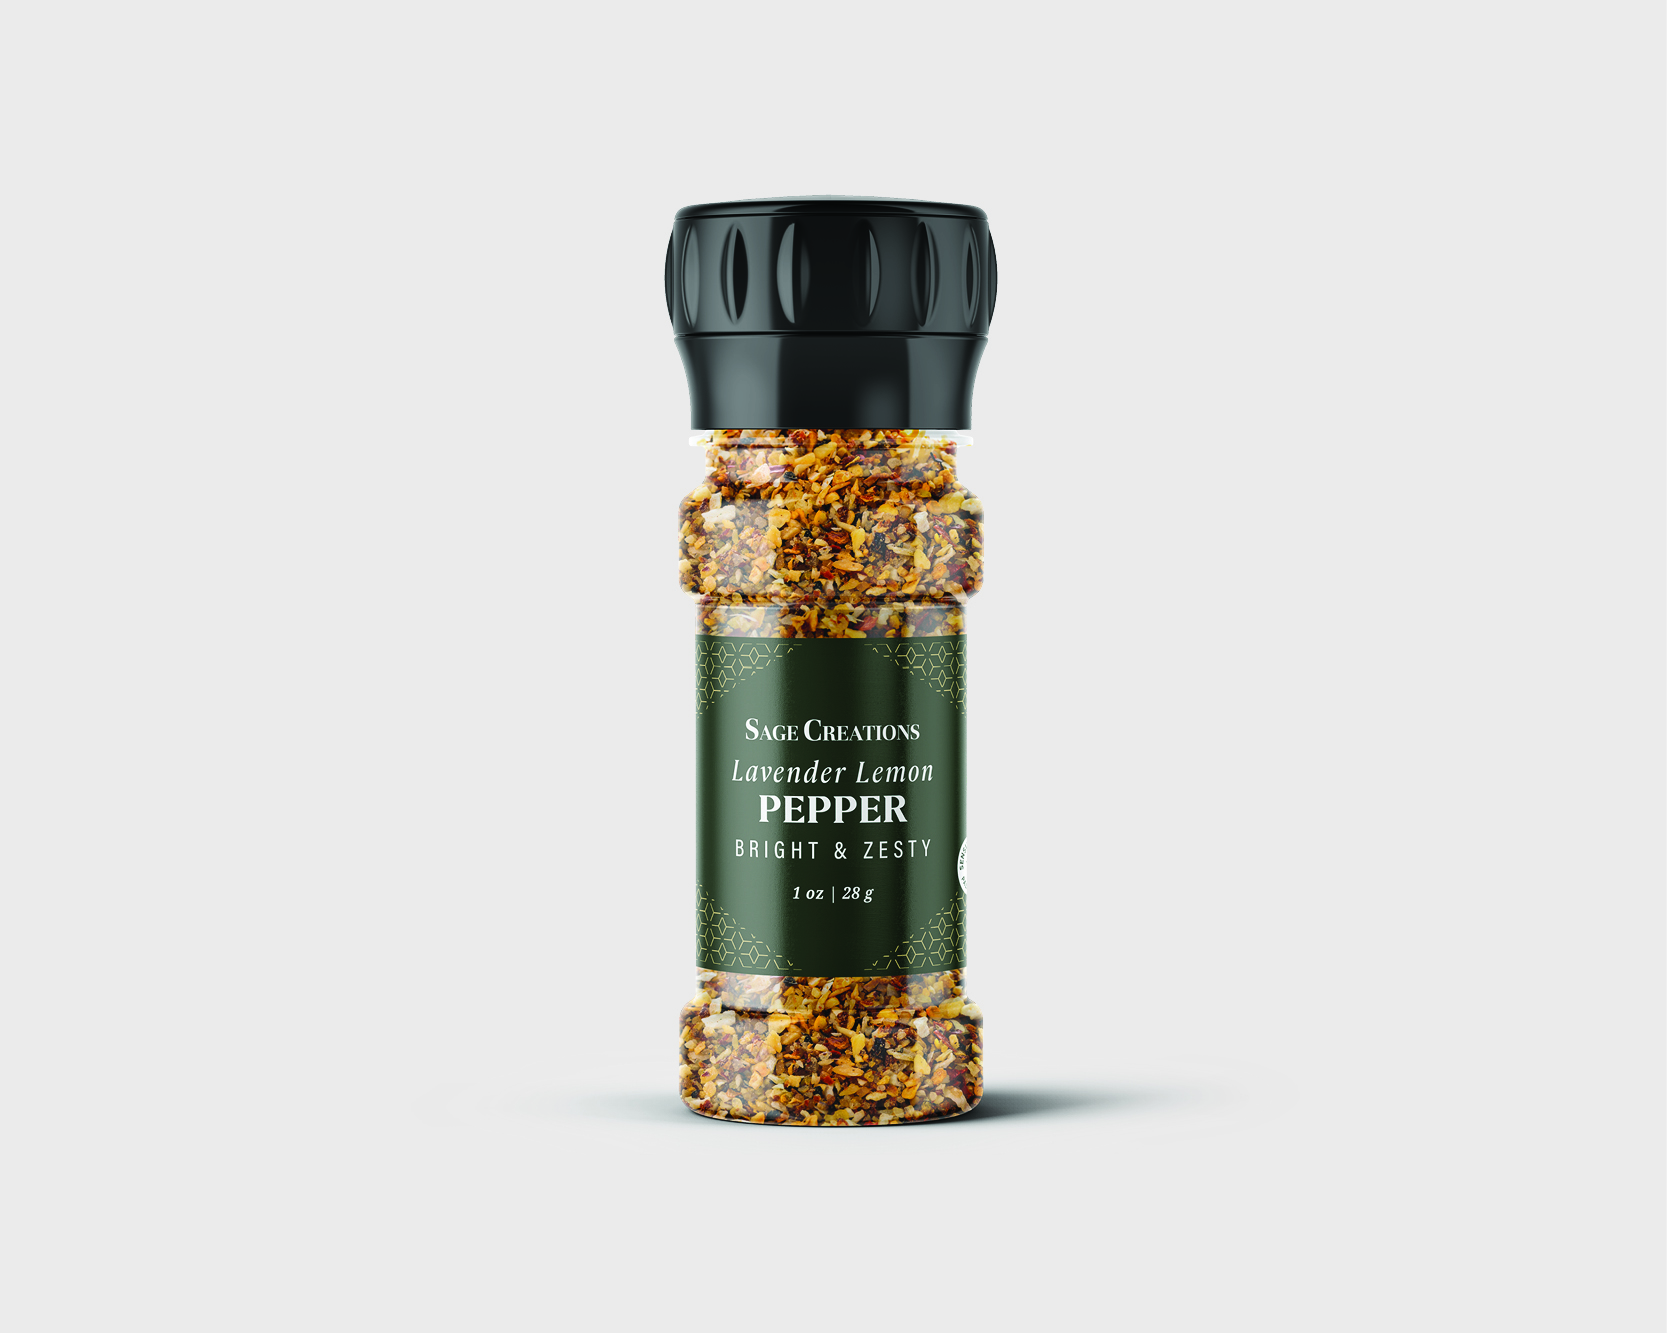 https://sagecreationsfarm.com/wp-content/uploads/2014/04/1oz-Lavender-Peppermill-Lemon-Pepper-front.jpg